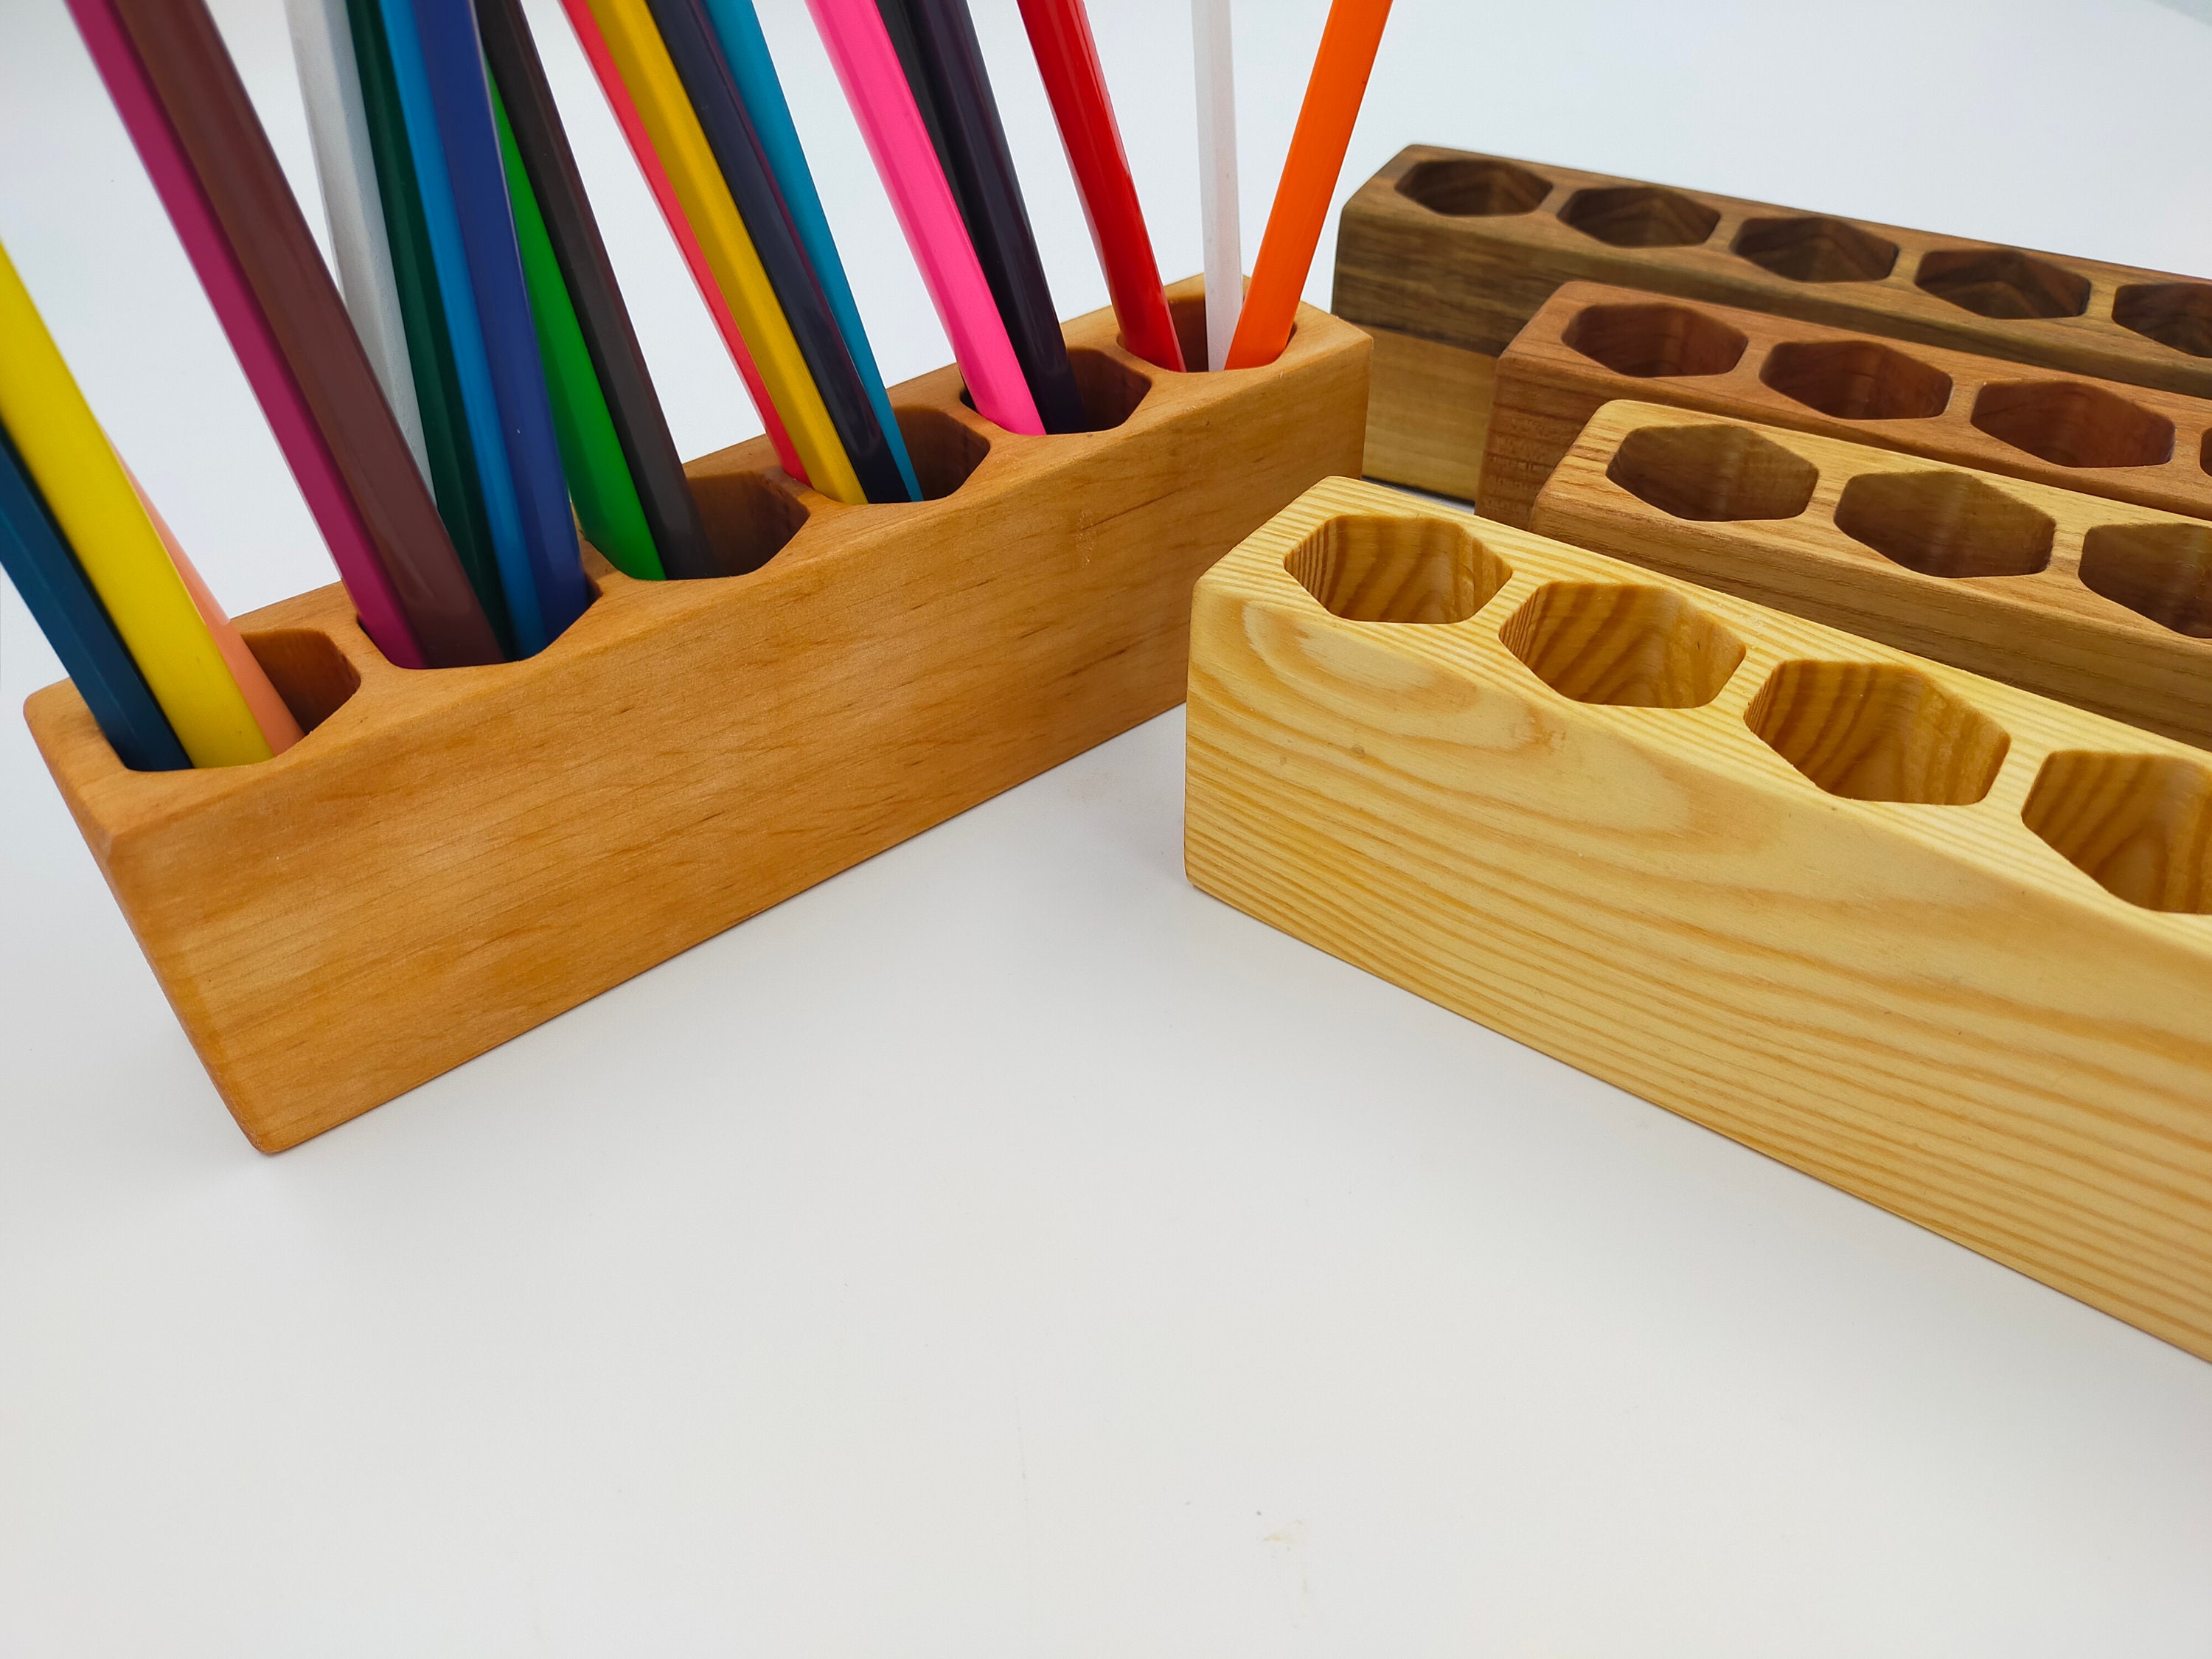 Minimalist Wooden Pencil Holder. Nordic Pen Cup for Desk